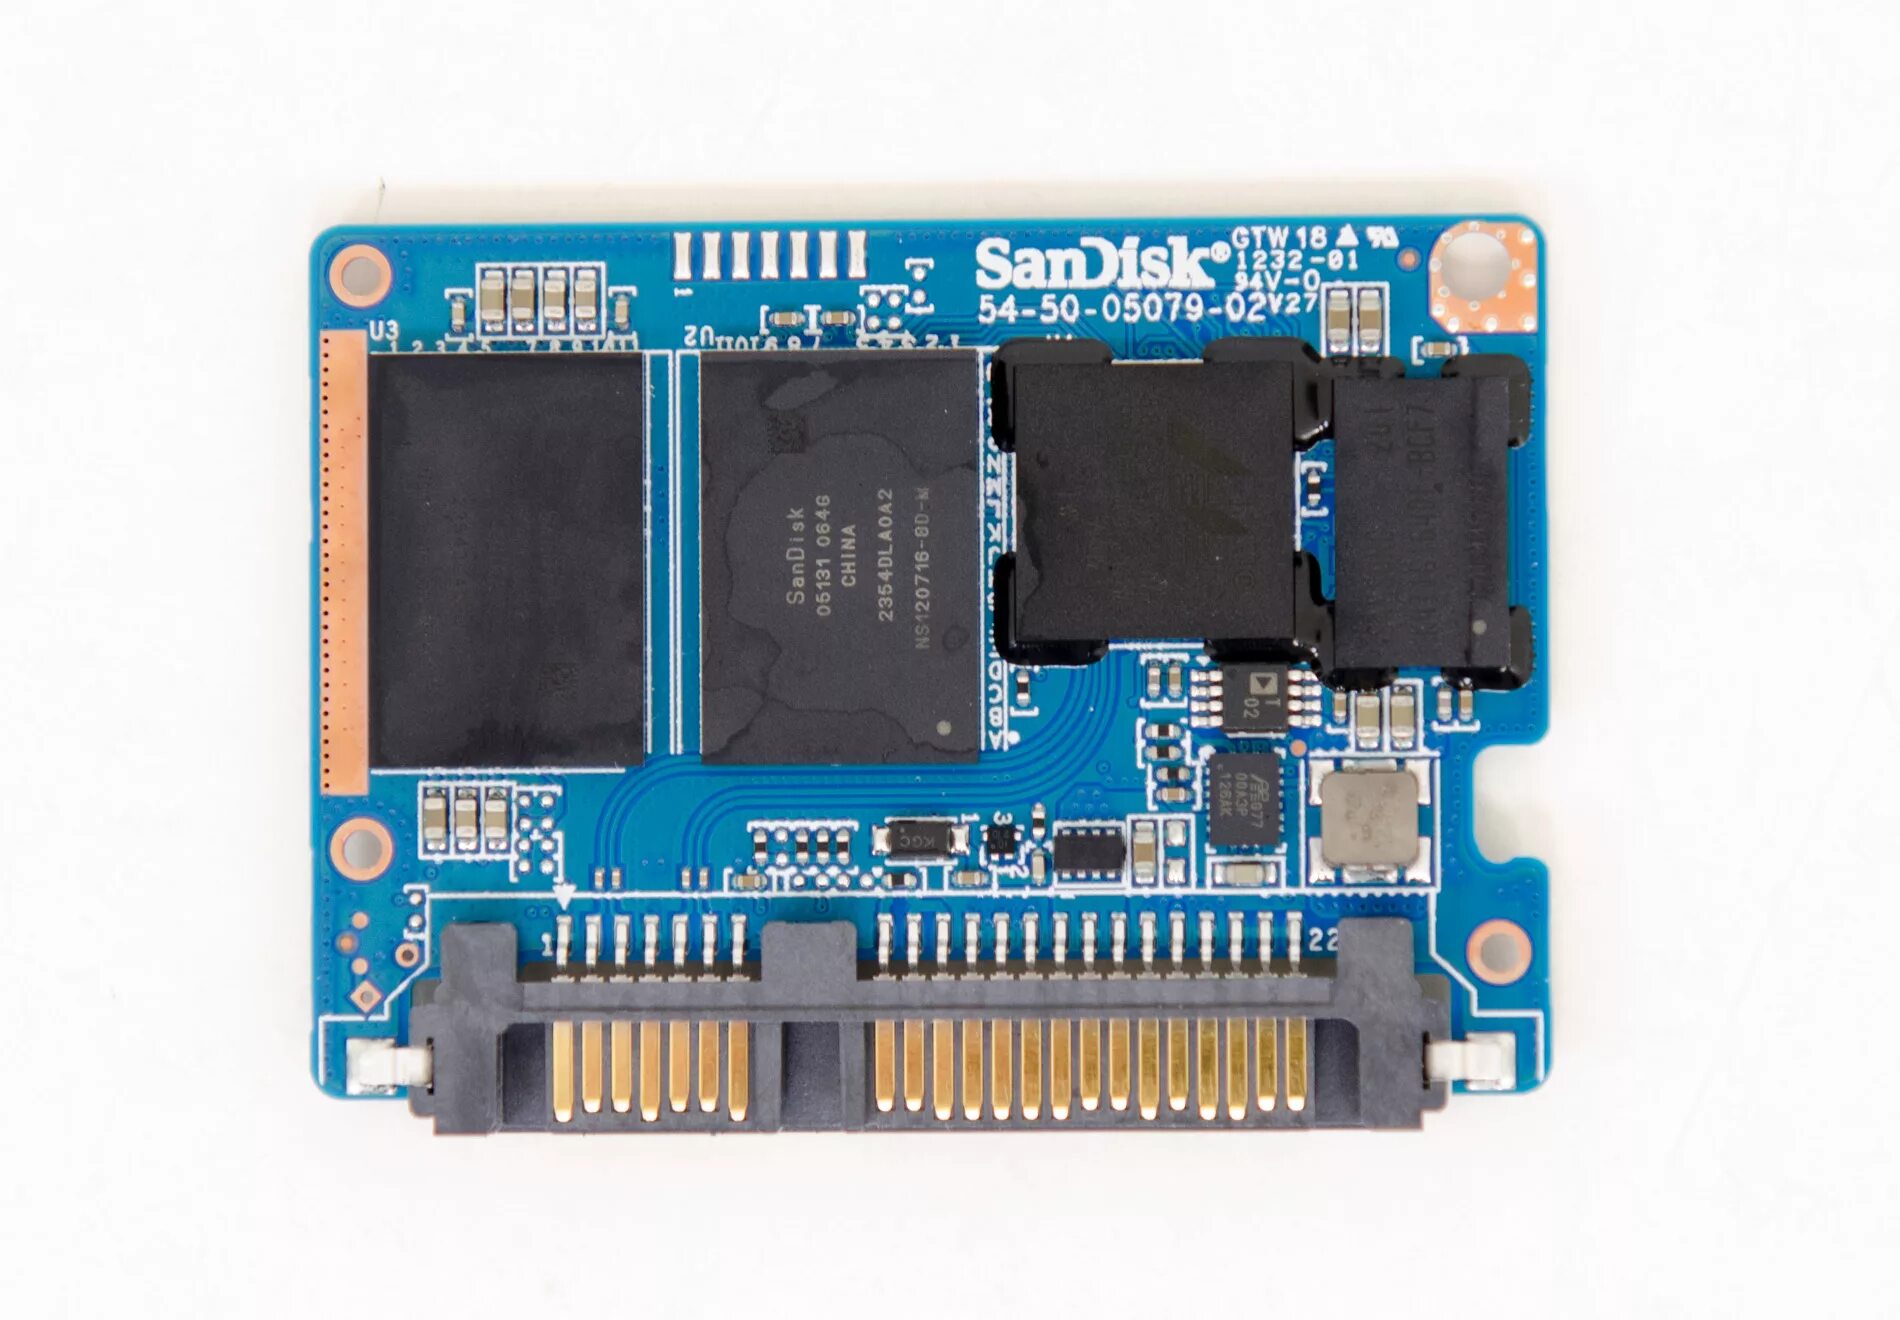 Sandisk ssd. SANDISK SSD p4 8gb. SANDISK 15106 NAND. SANDISK GTW 18. SANDISK Прошивка NAND.